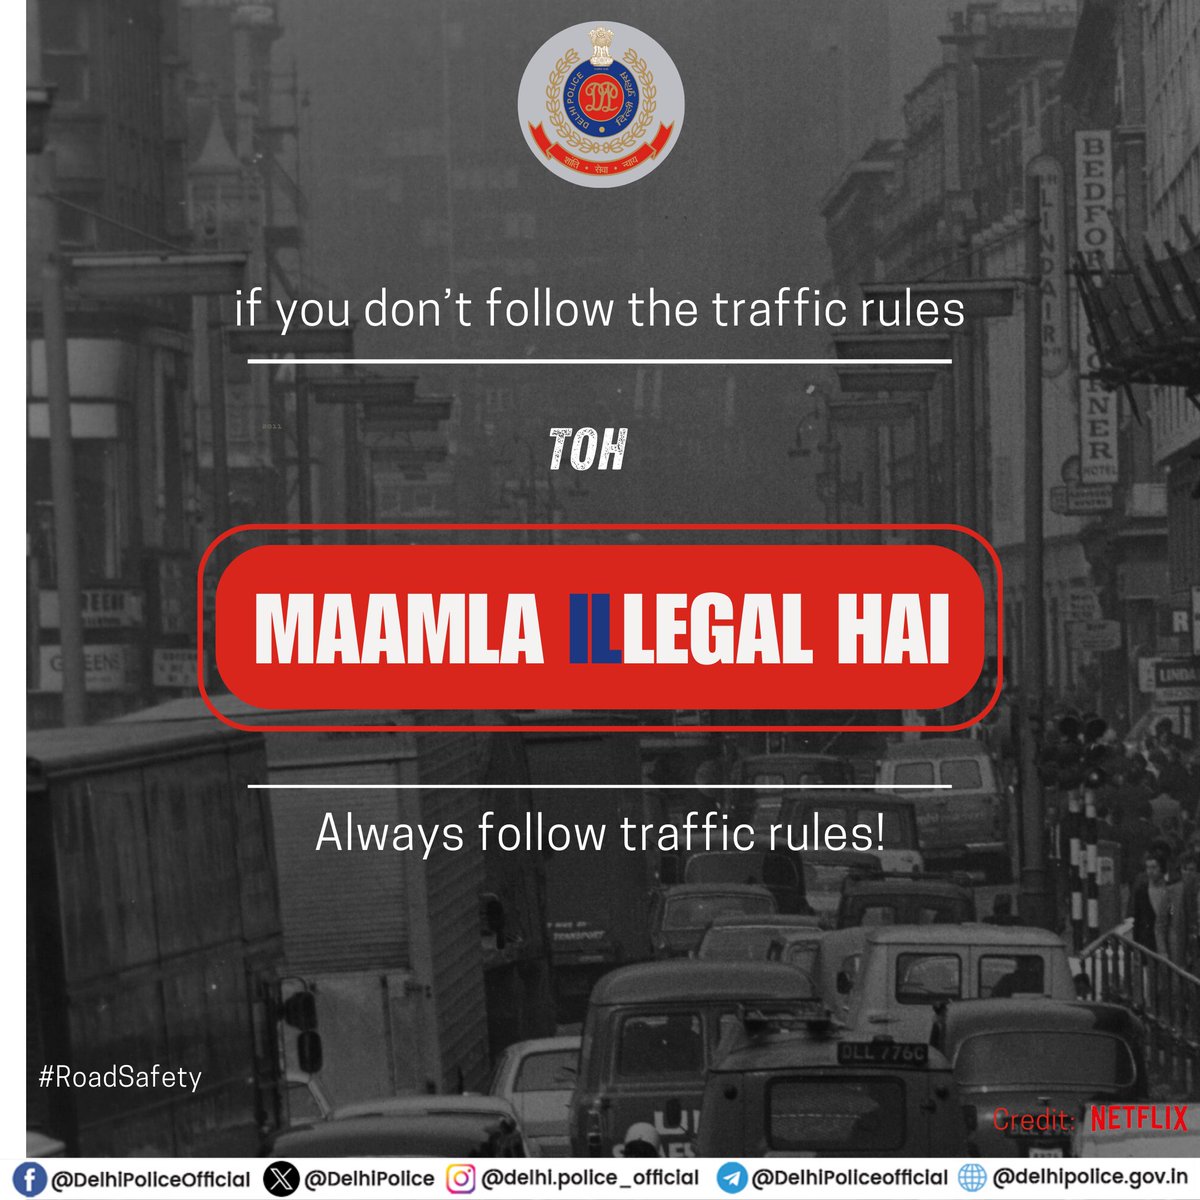 Always follow traffic rules.
If you don't... then maamla illegal hai.

#RoadSafety
#MaamlaLegalHai